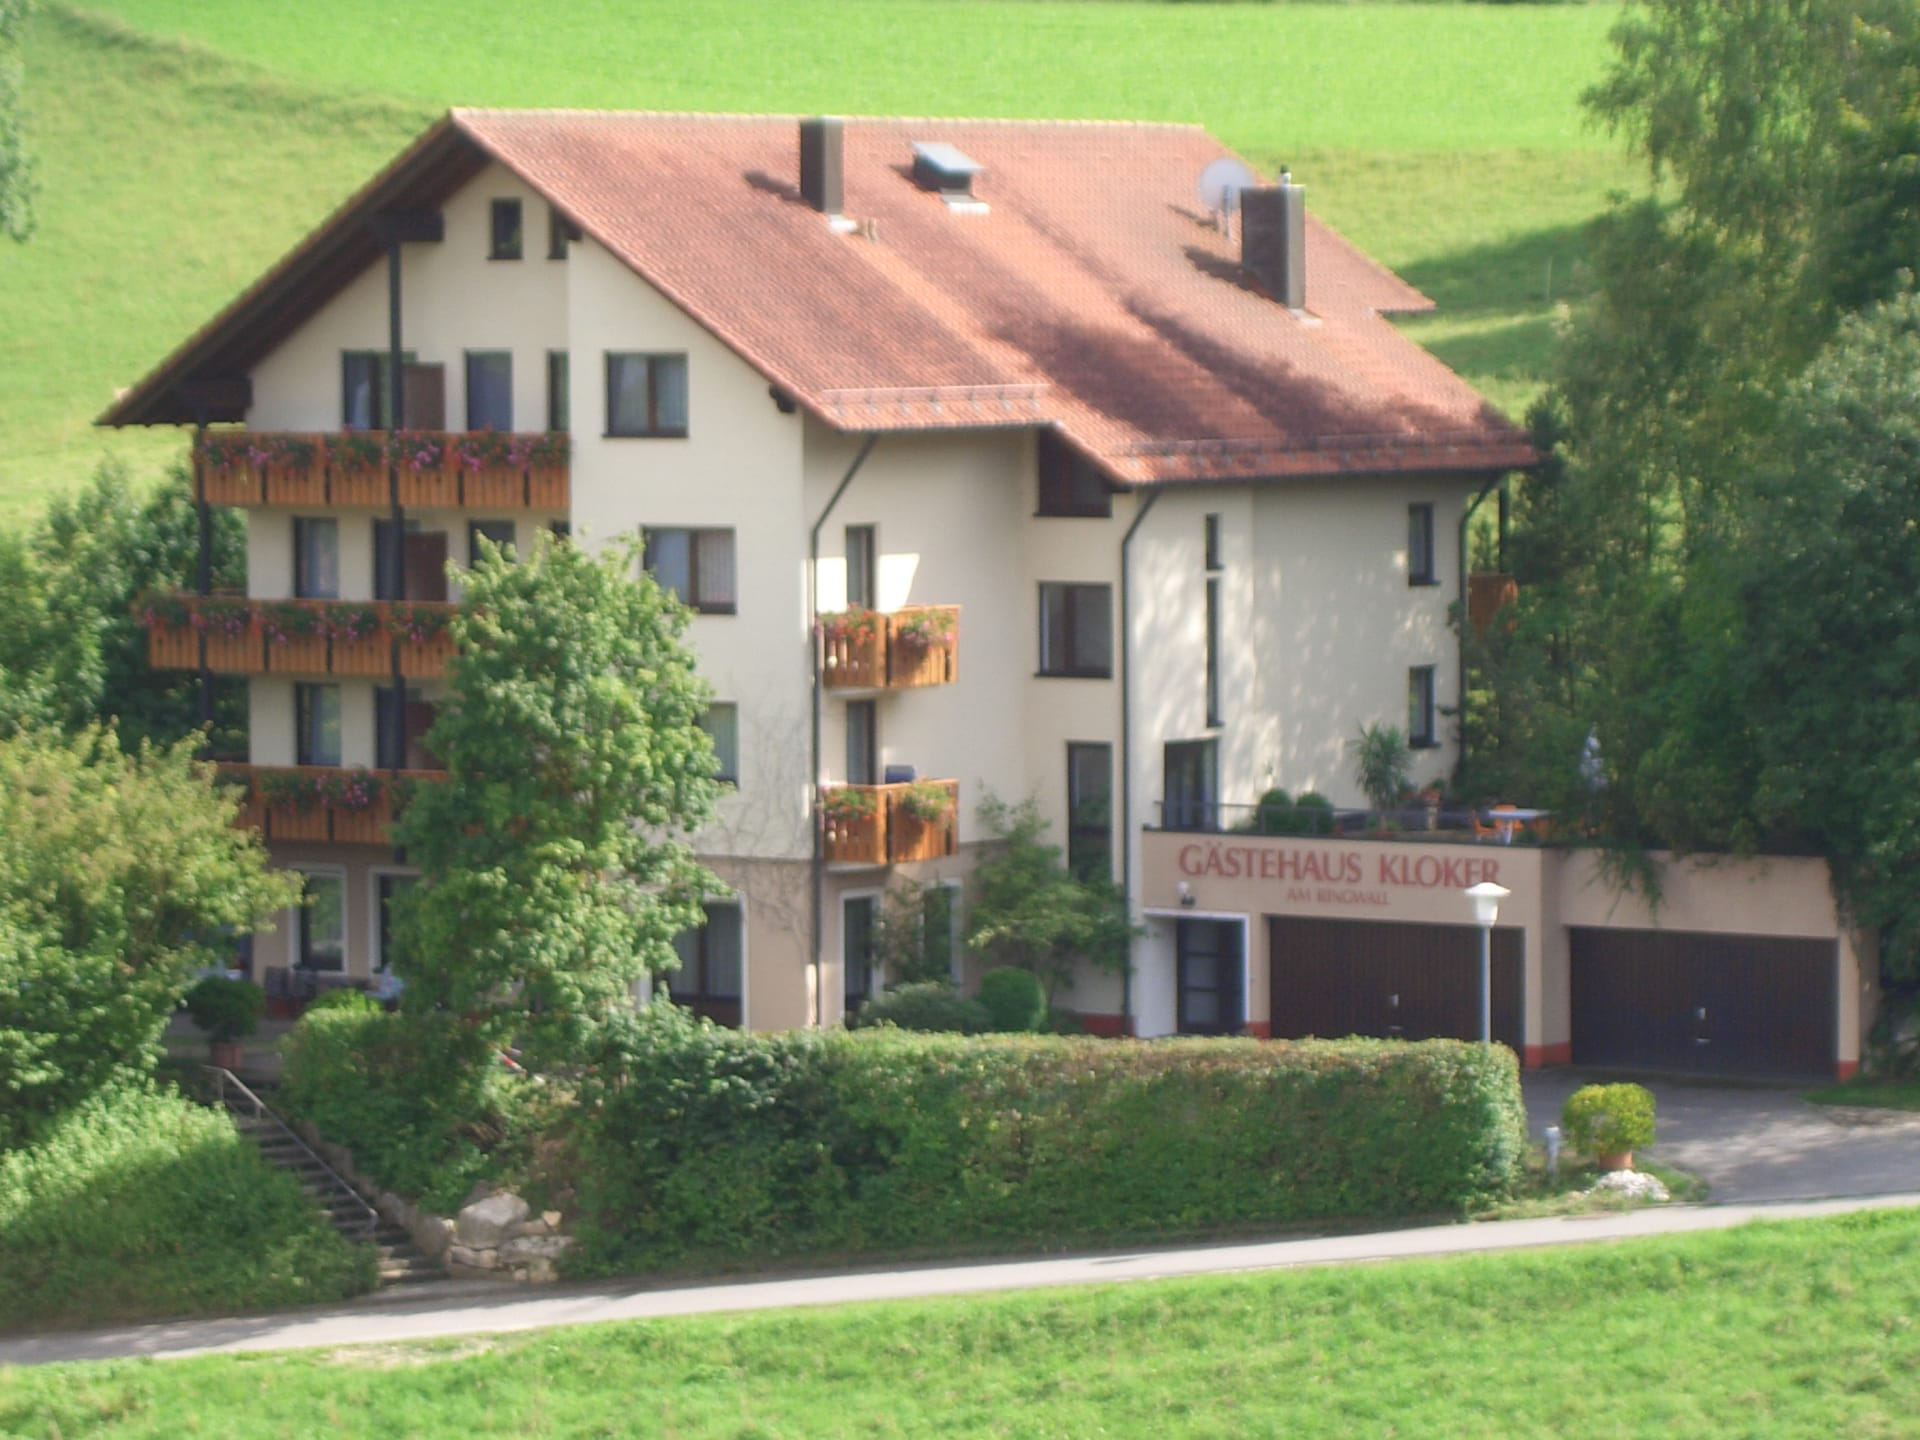 Flair Hotel Gasthof Hirsch